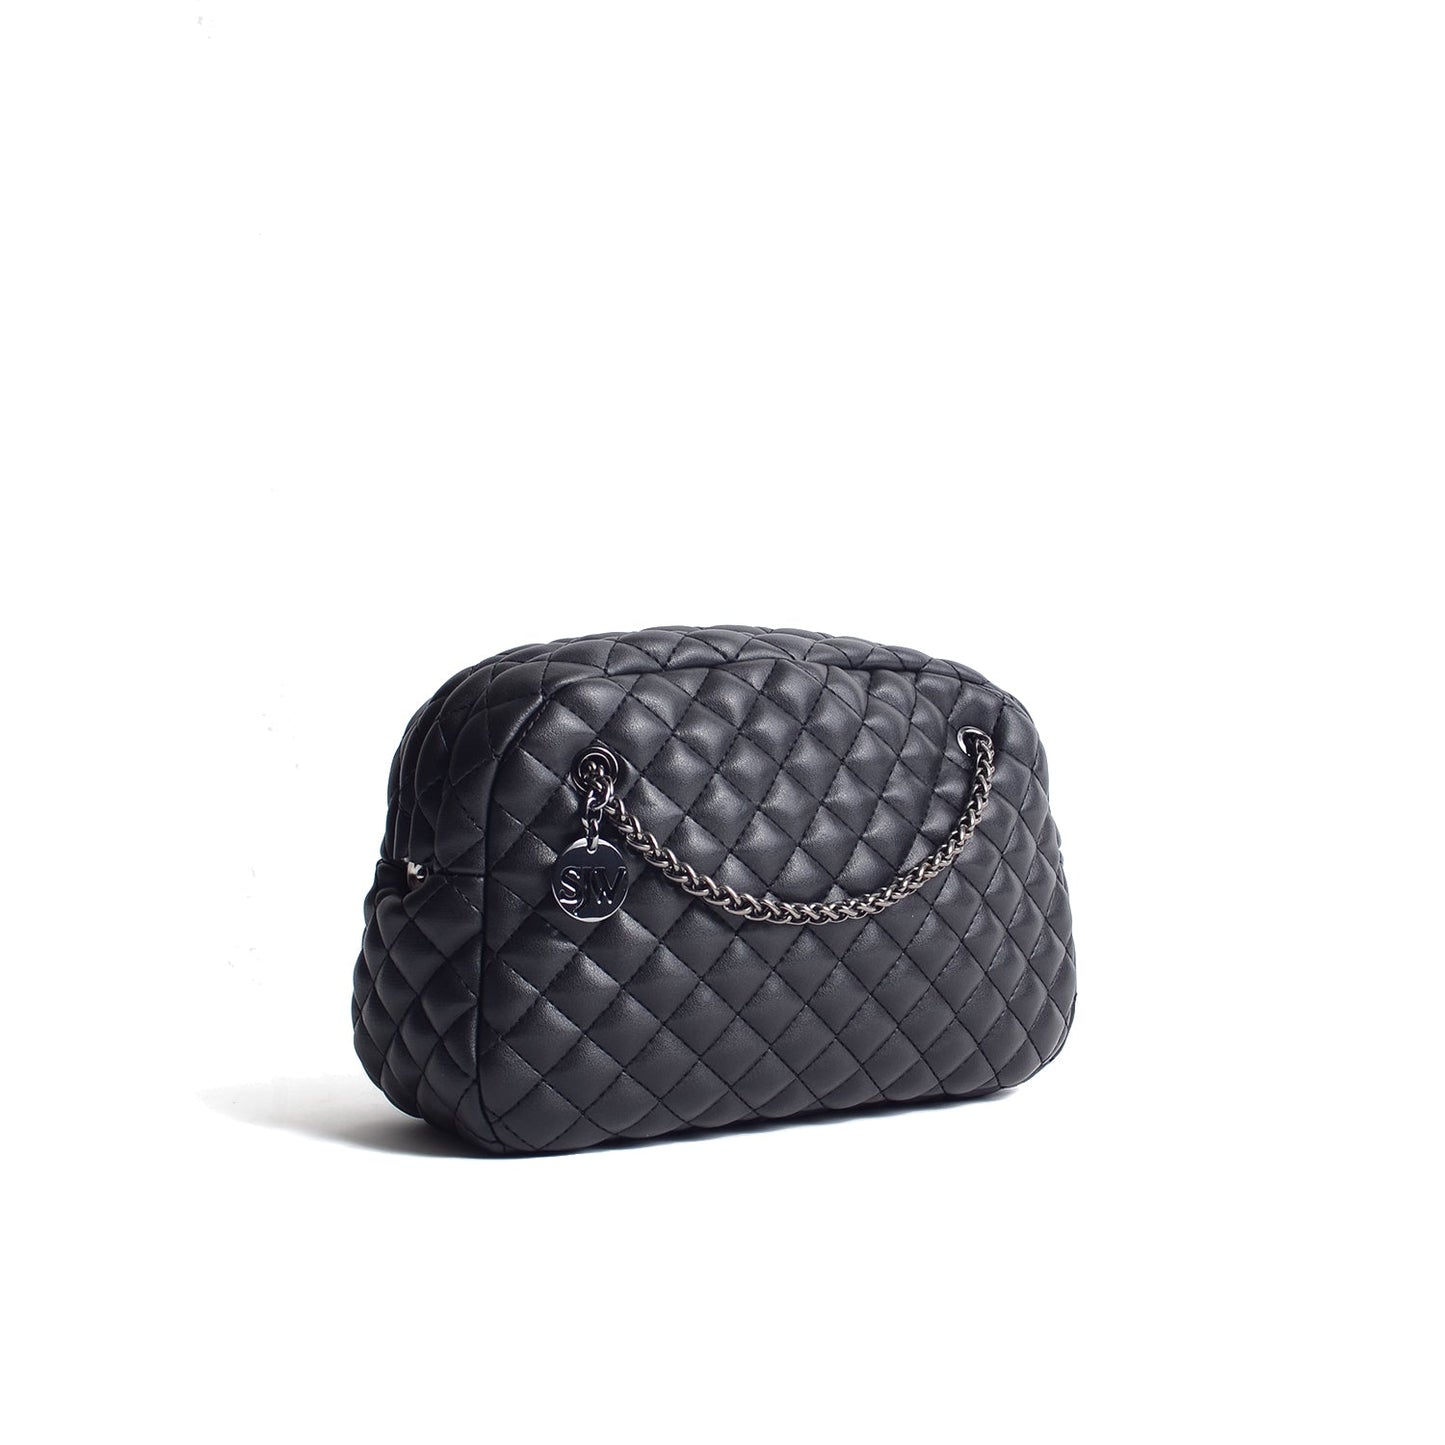 Carlton Vegan Leather Quilted Handbag - Black - SJW BAGS LONDON